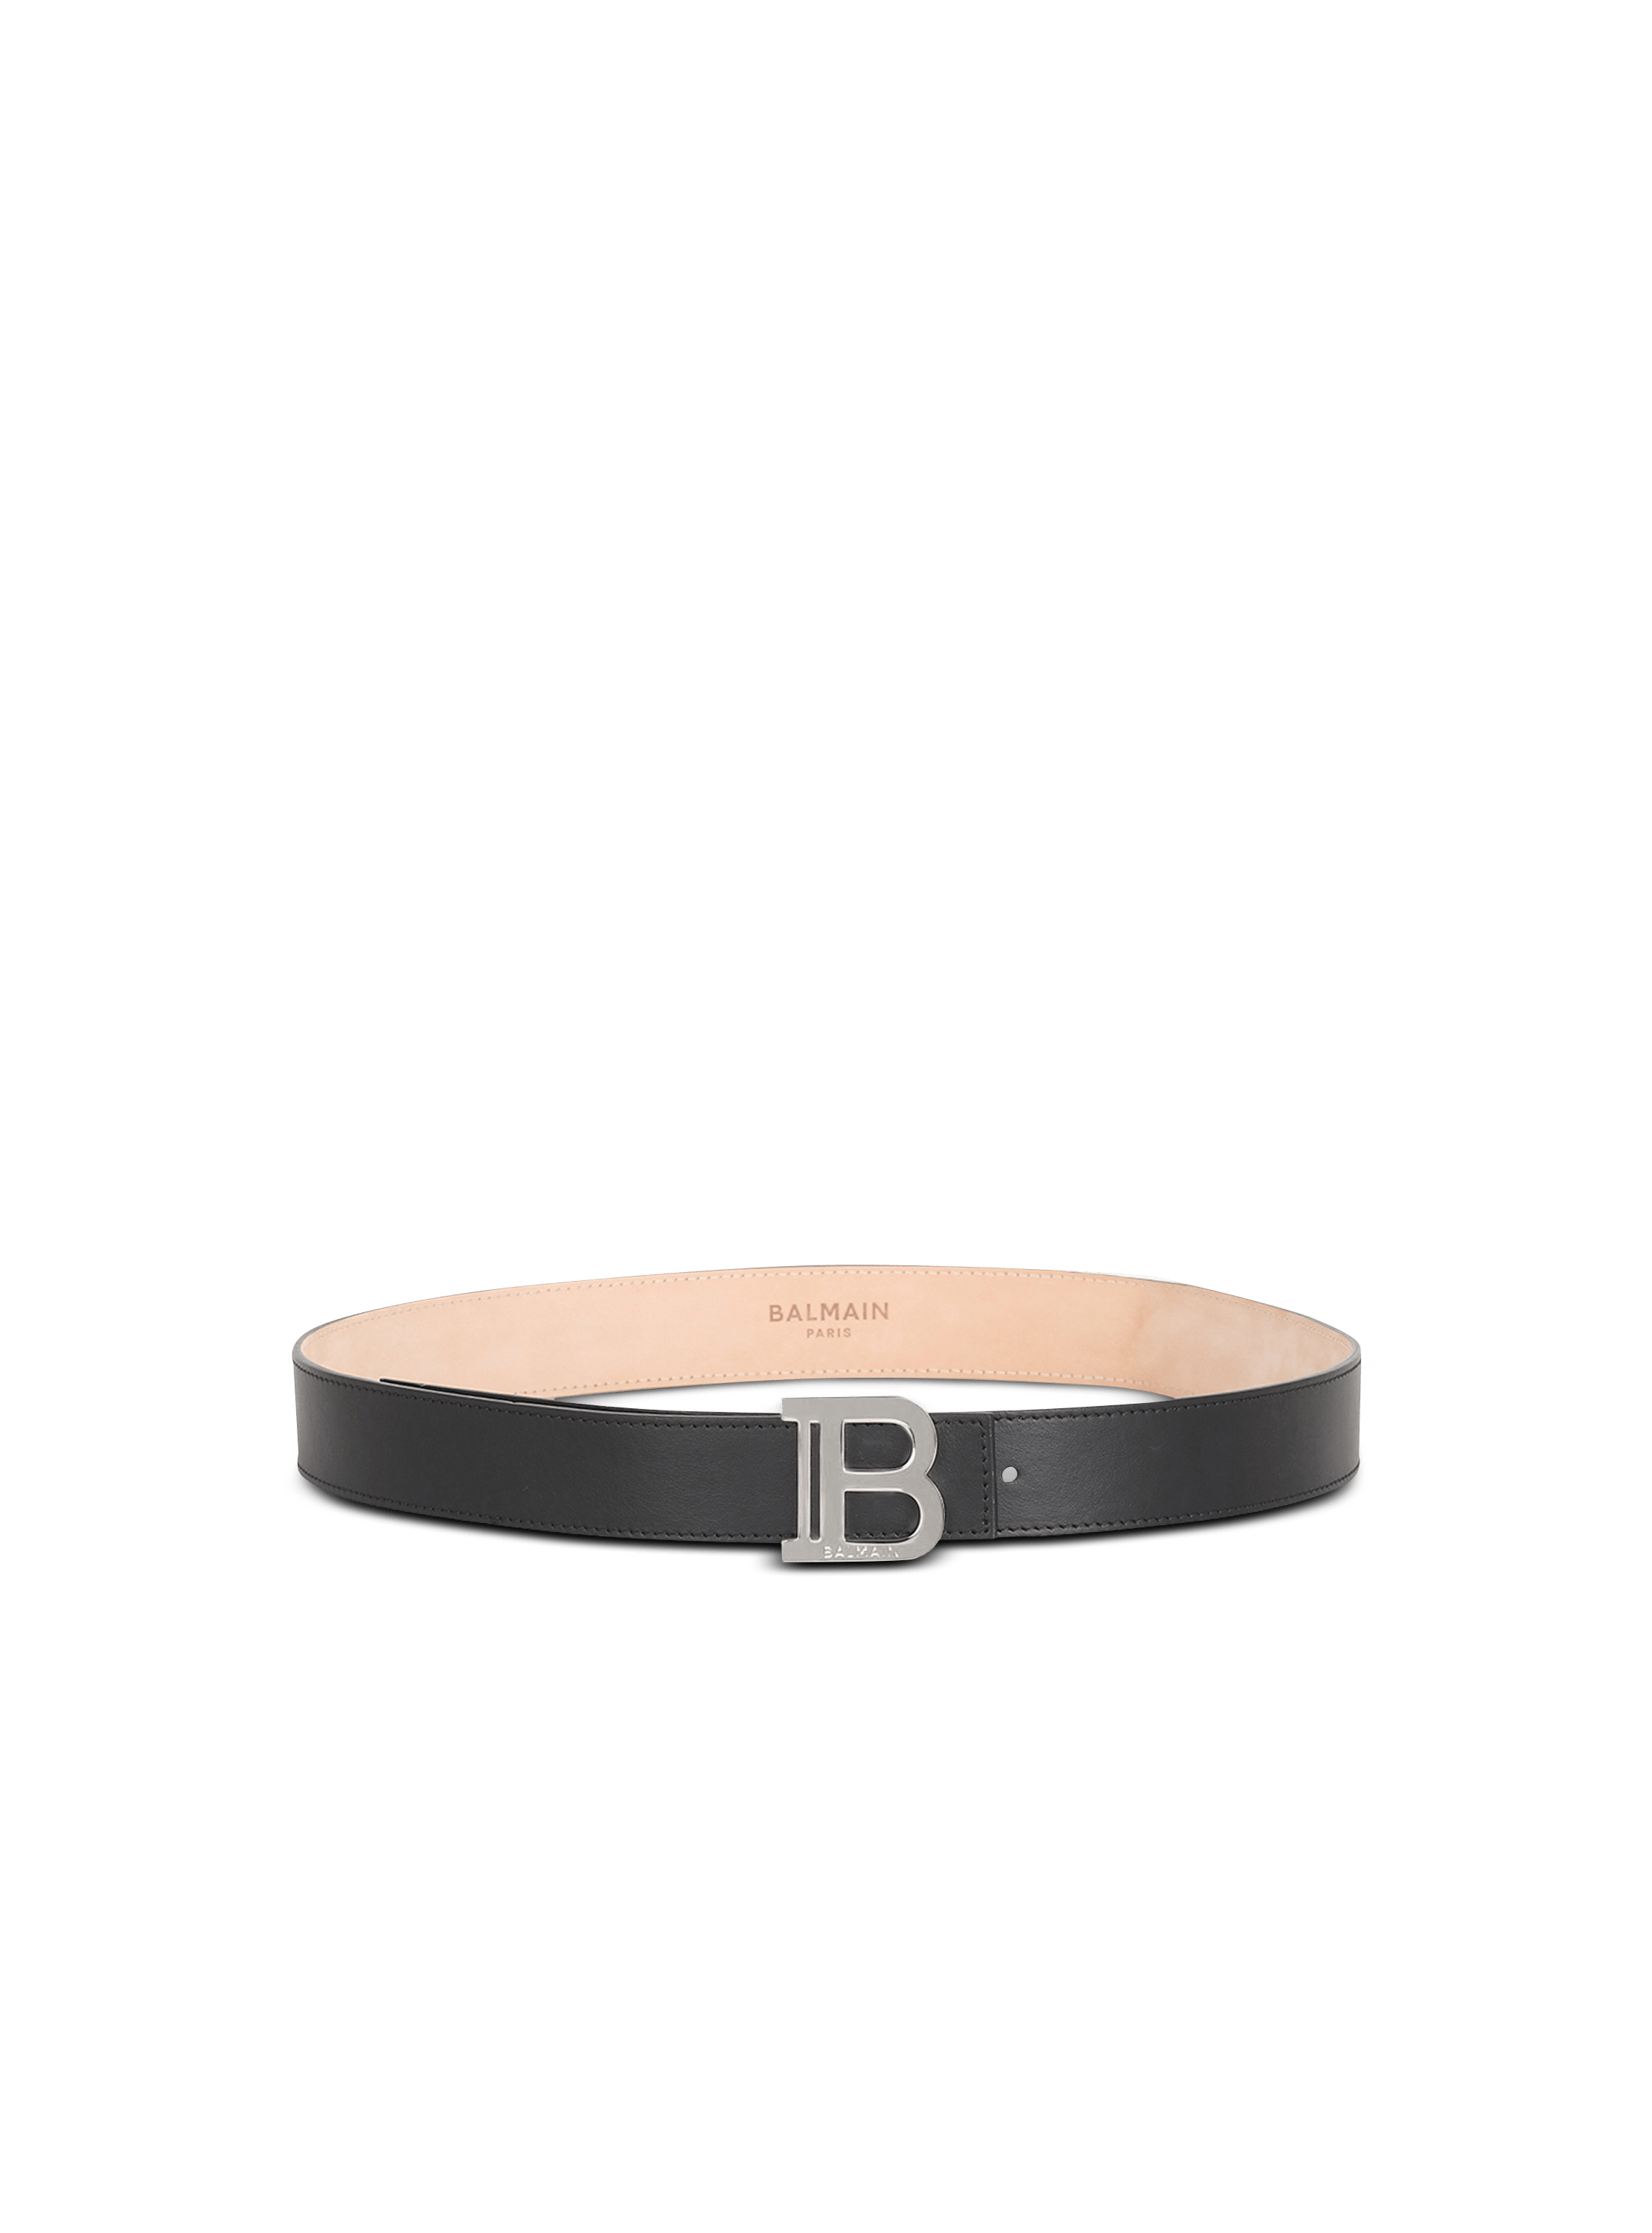 B-Belt光滑皮革腰带